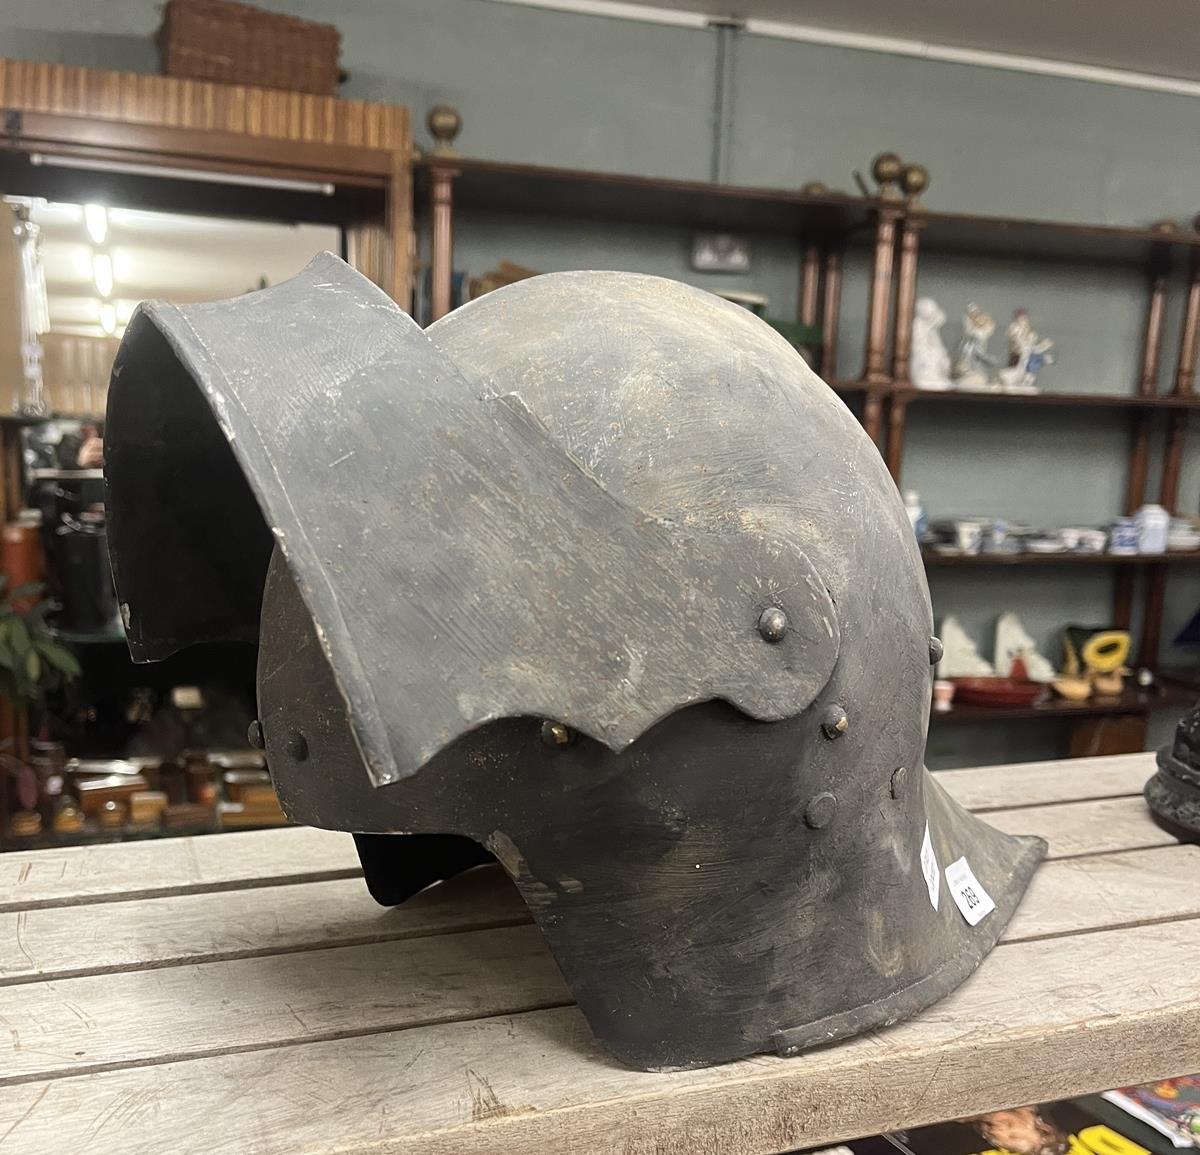 Reproduction medieval sallet style helmet